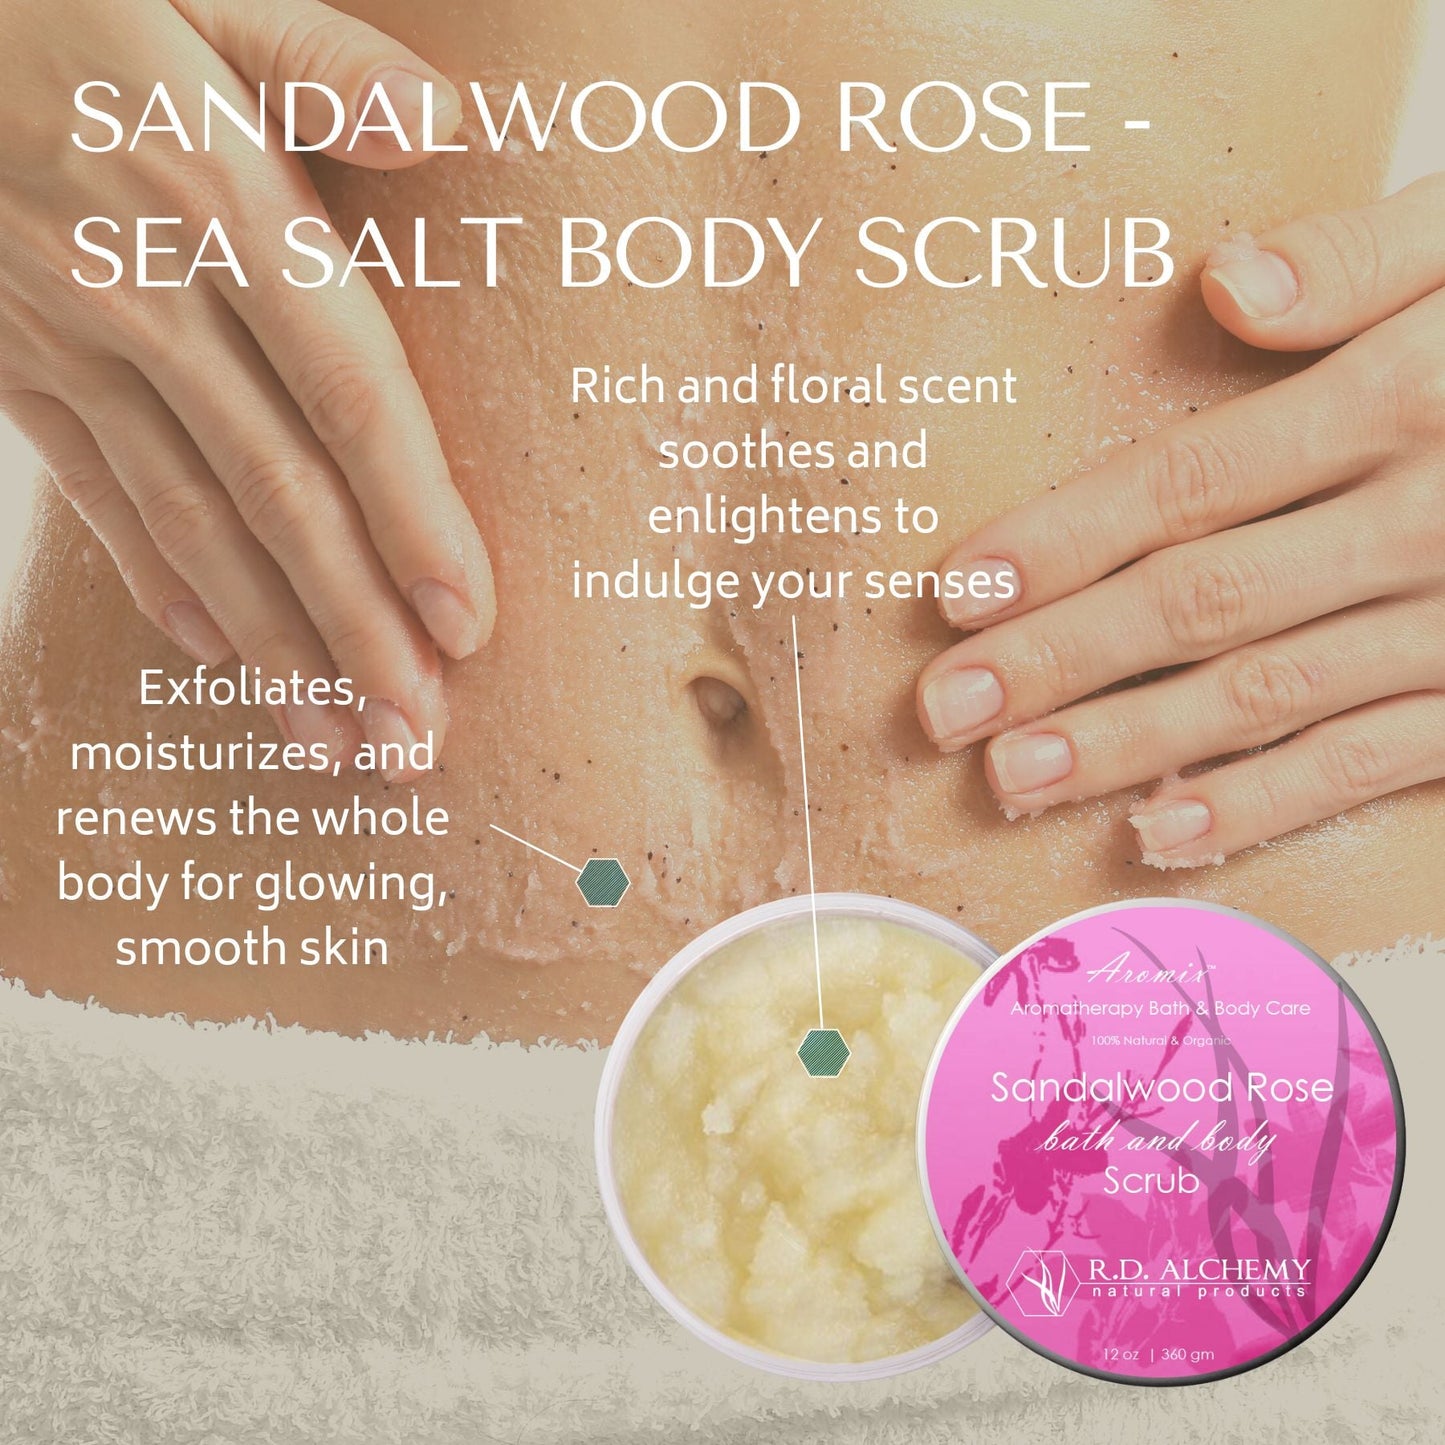 Sandalwood Rose - Sea Salt Body Scrub